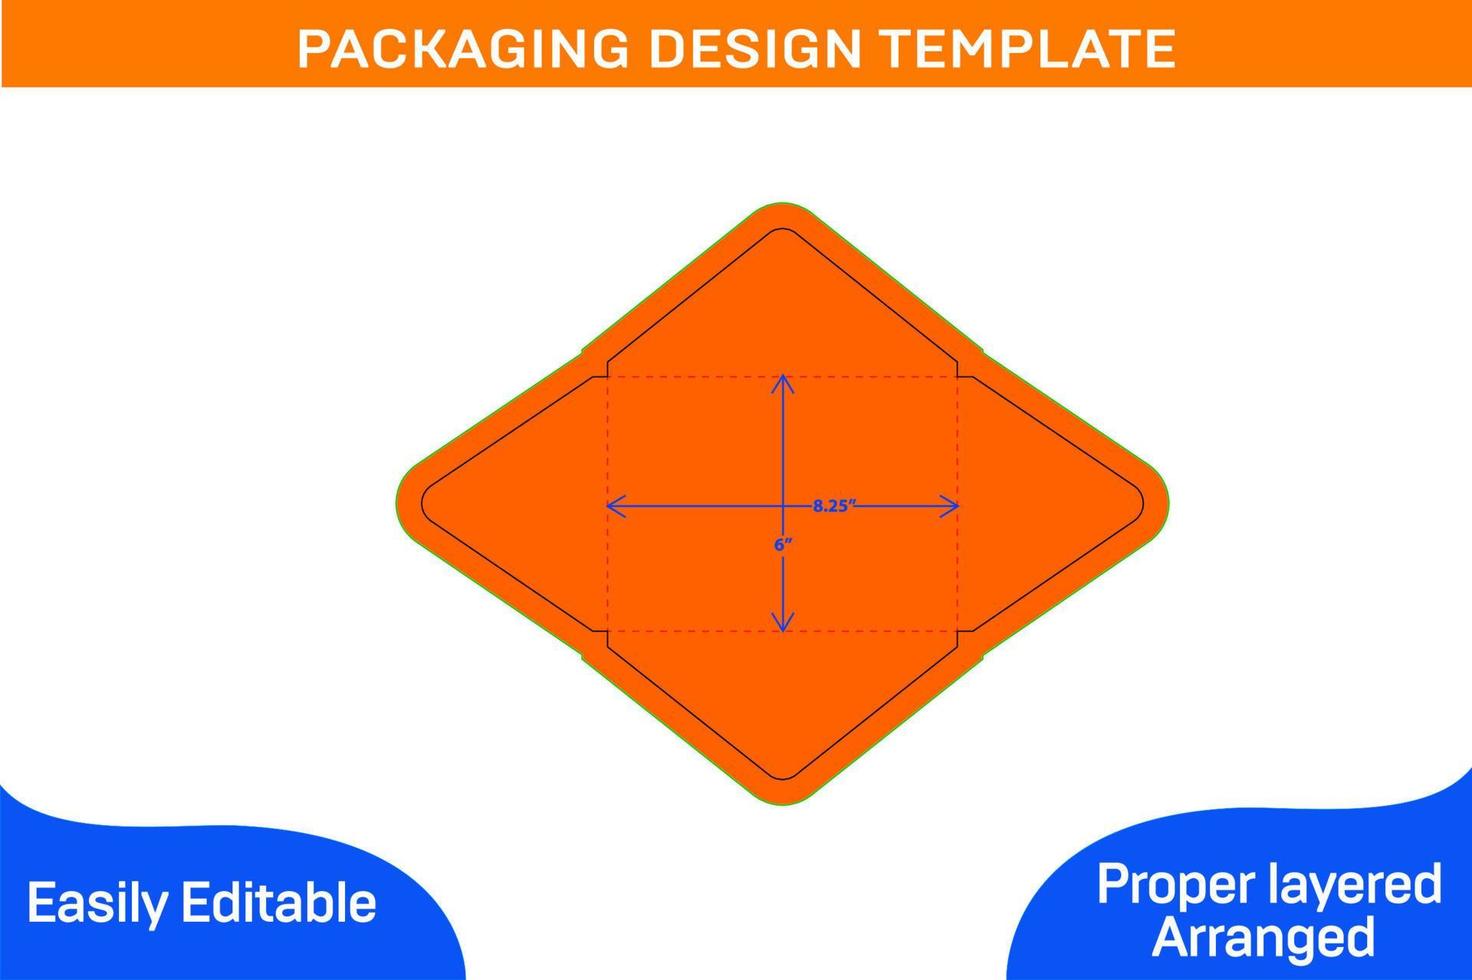 6x8.25 inch verpakking wees klep envelop dieline sjabloon en 3d envelop kleur ontwerp sjabloon vector